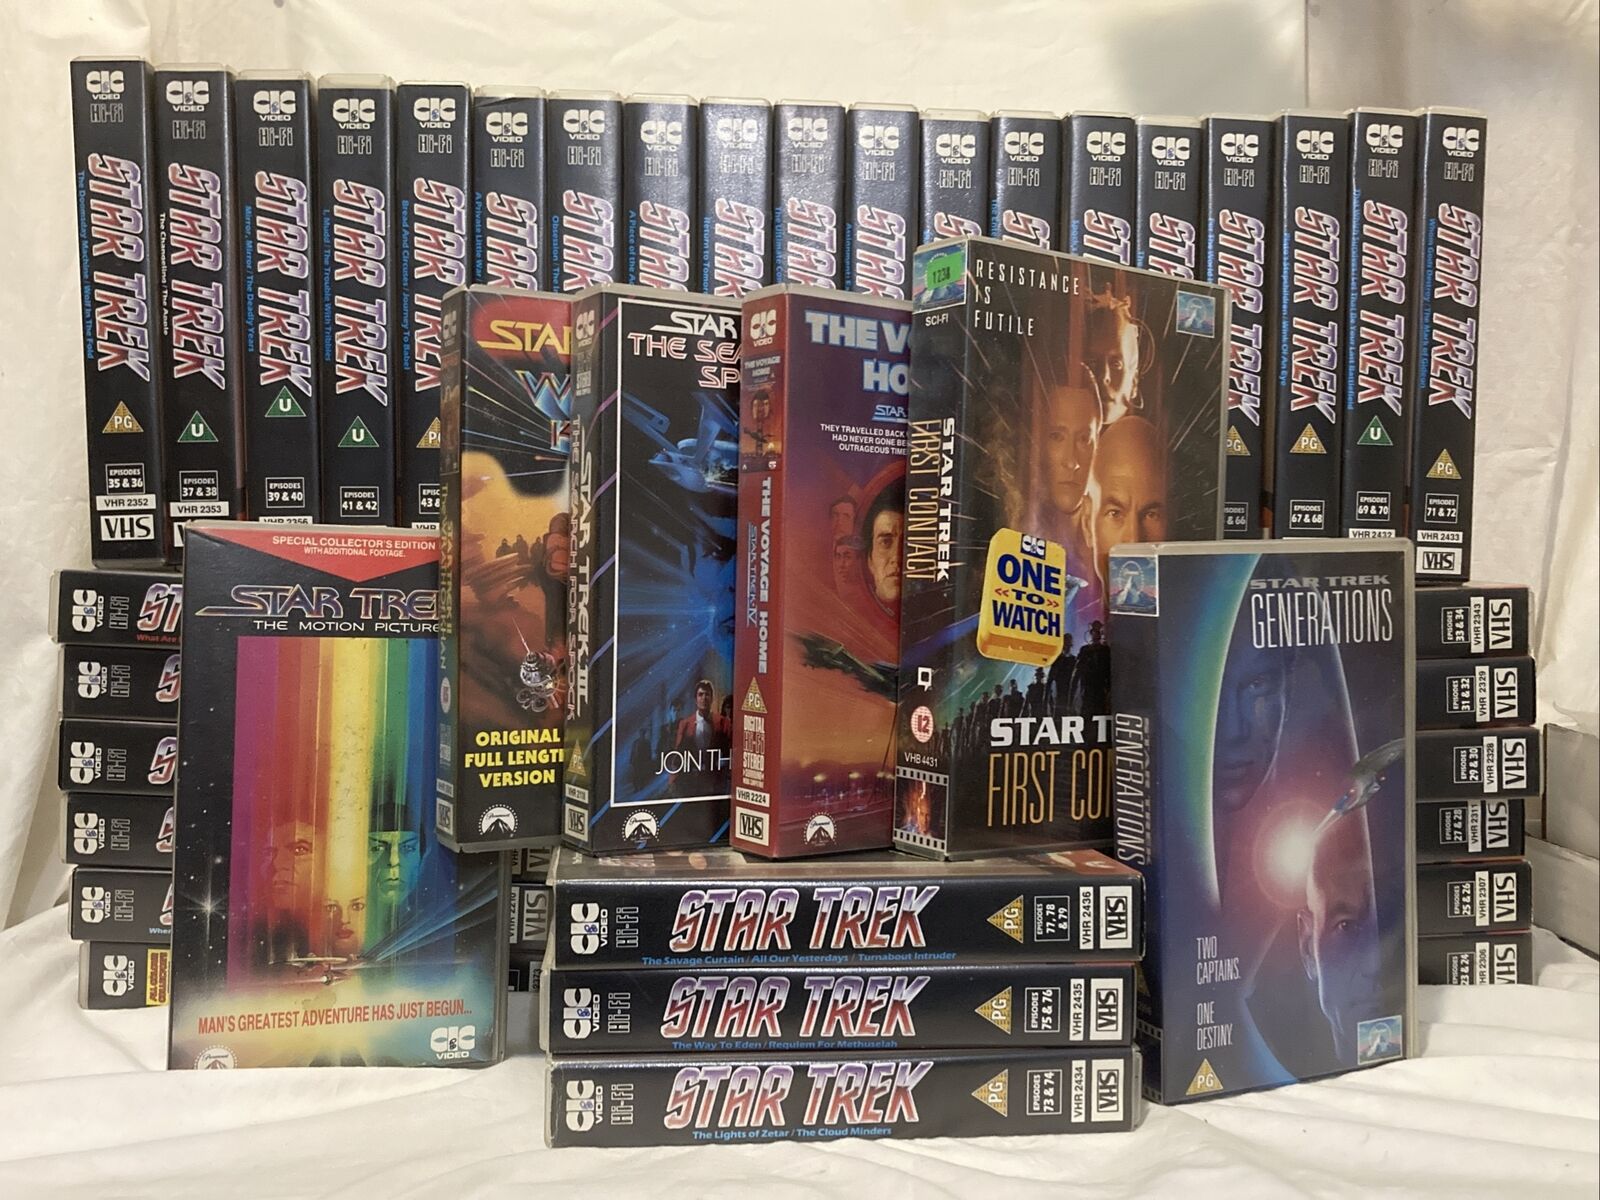 VINTAGE: Star Trek The Complete Original Series & Movies on VHS Tapes Vol. 1-79